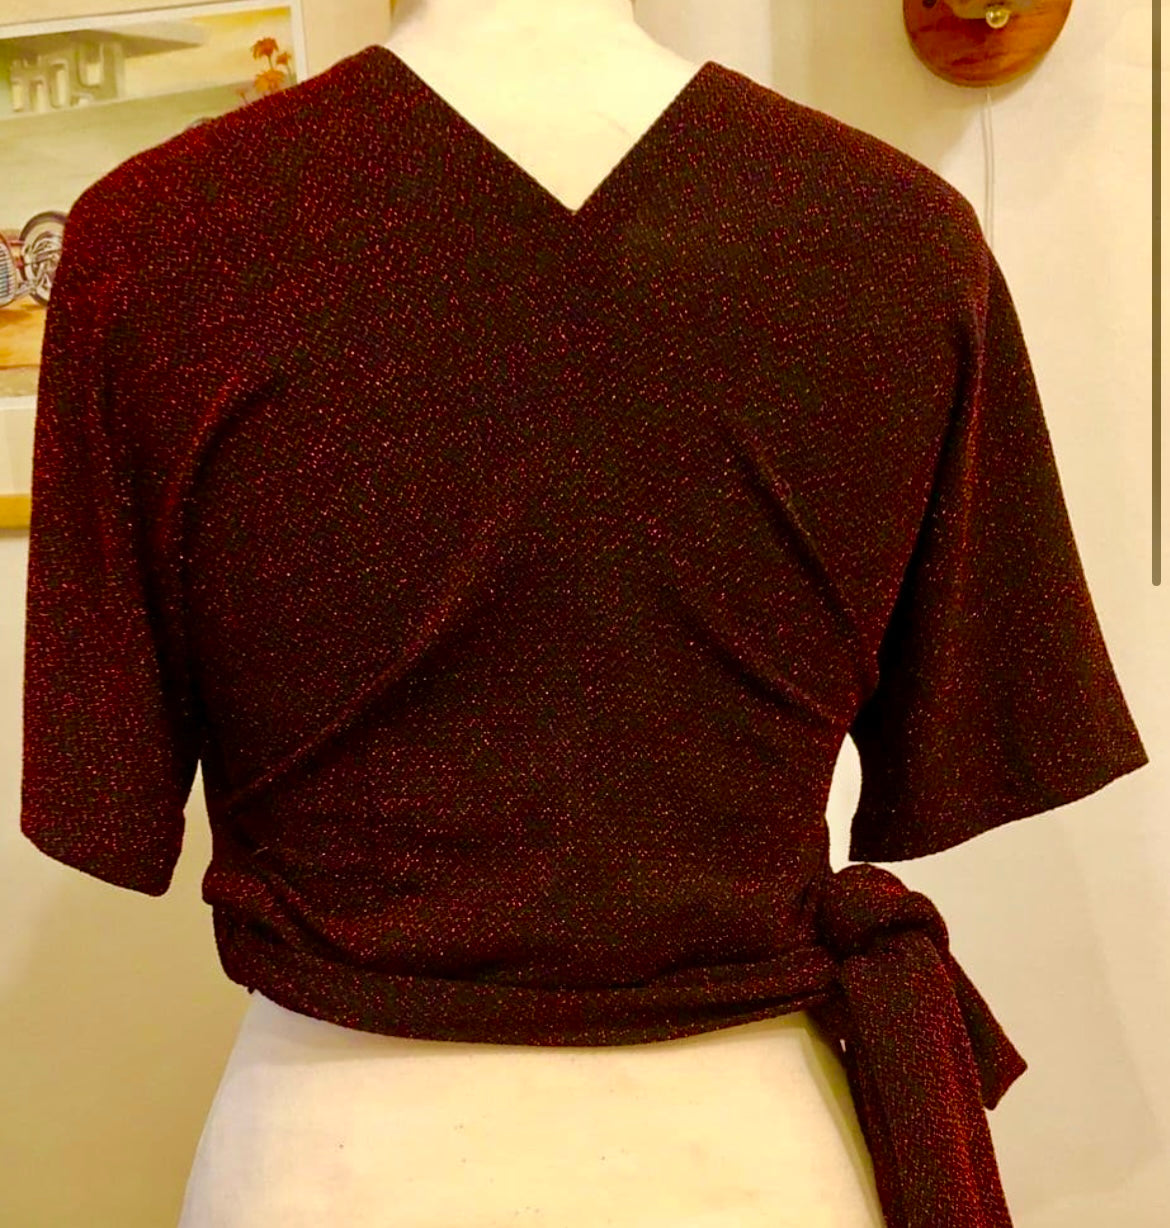 Minnie - vintage 1950s inspired ruby red lurex and black lurex jersey wrap top XS to XXL